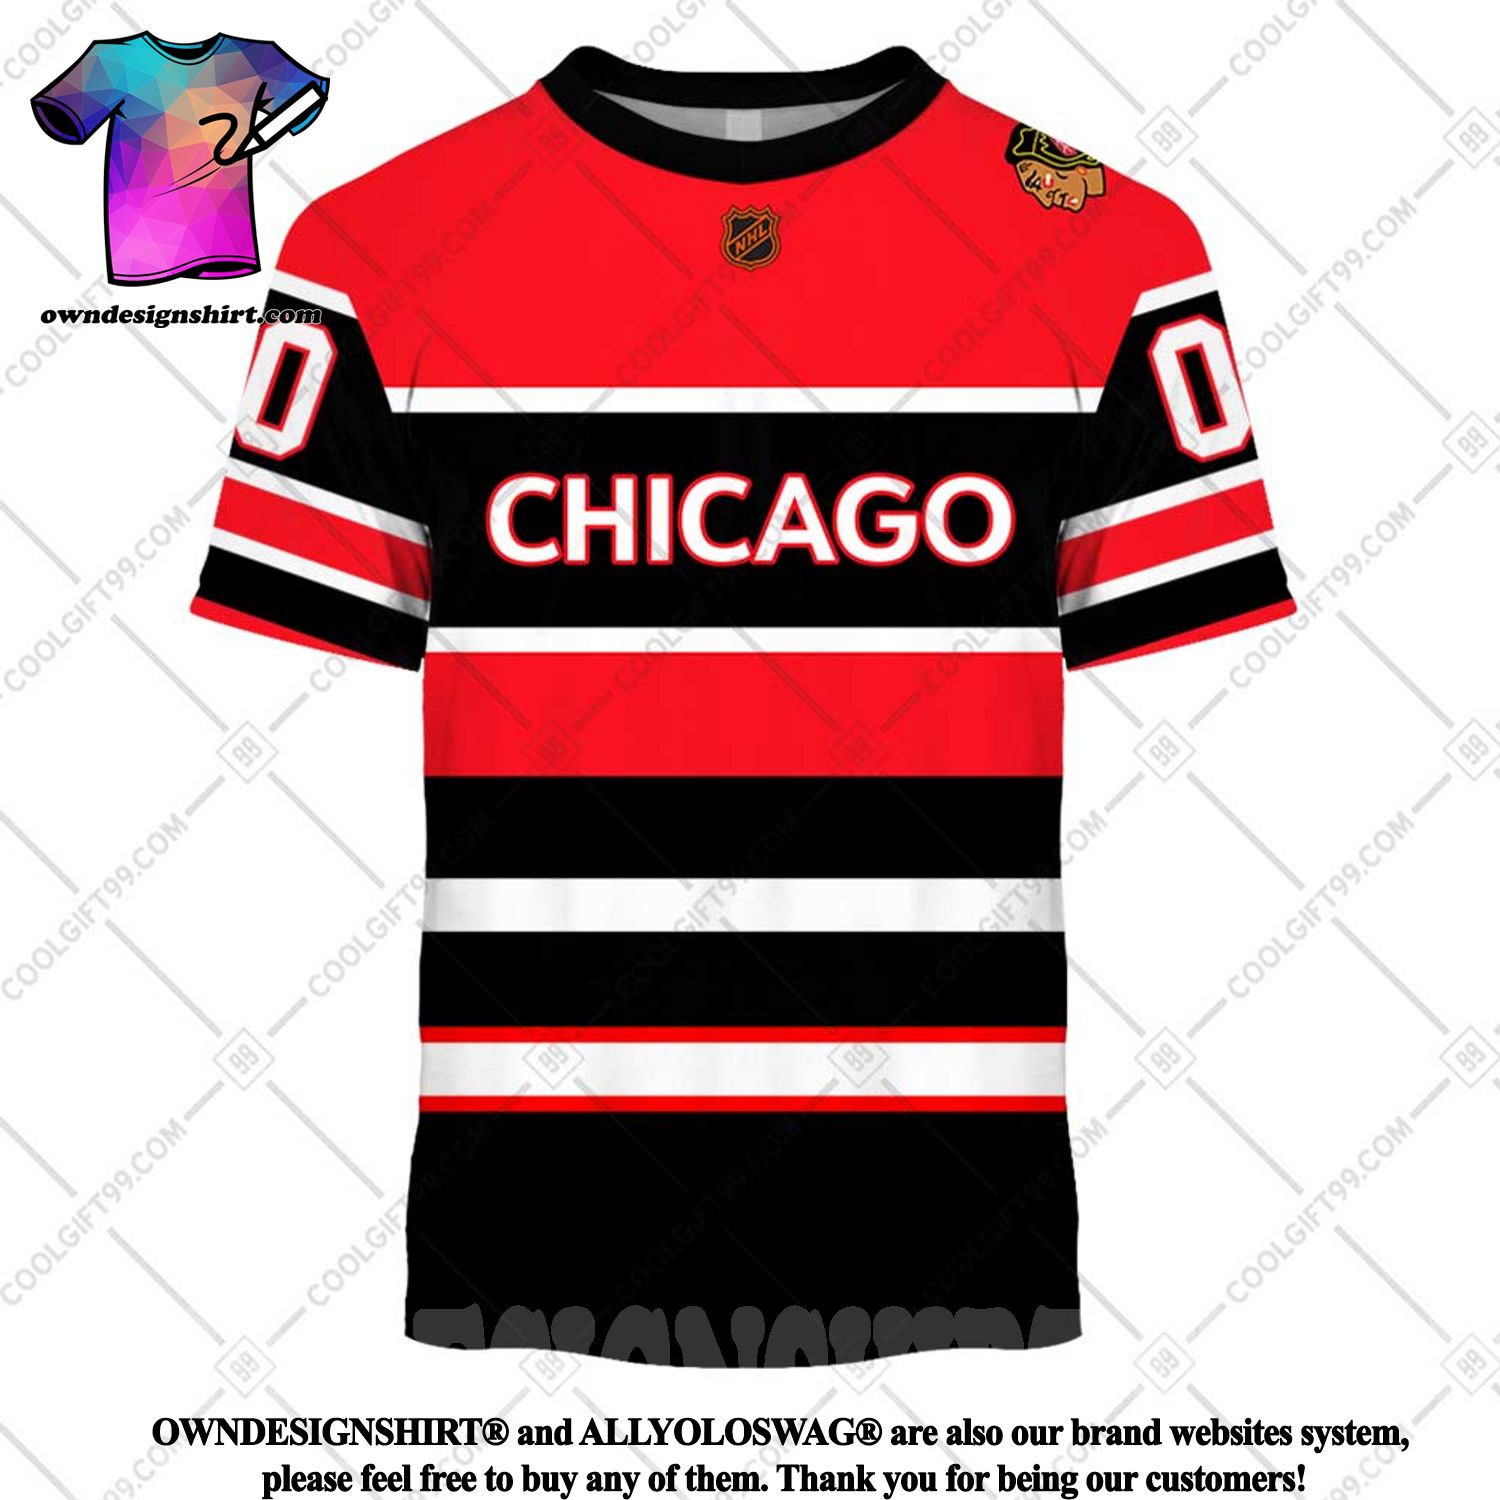 Chicago Blackhawks retro jersey